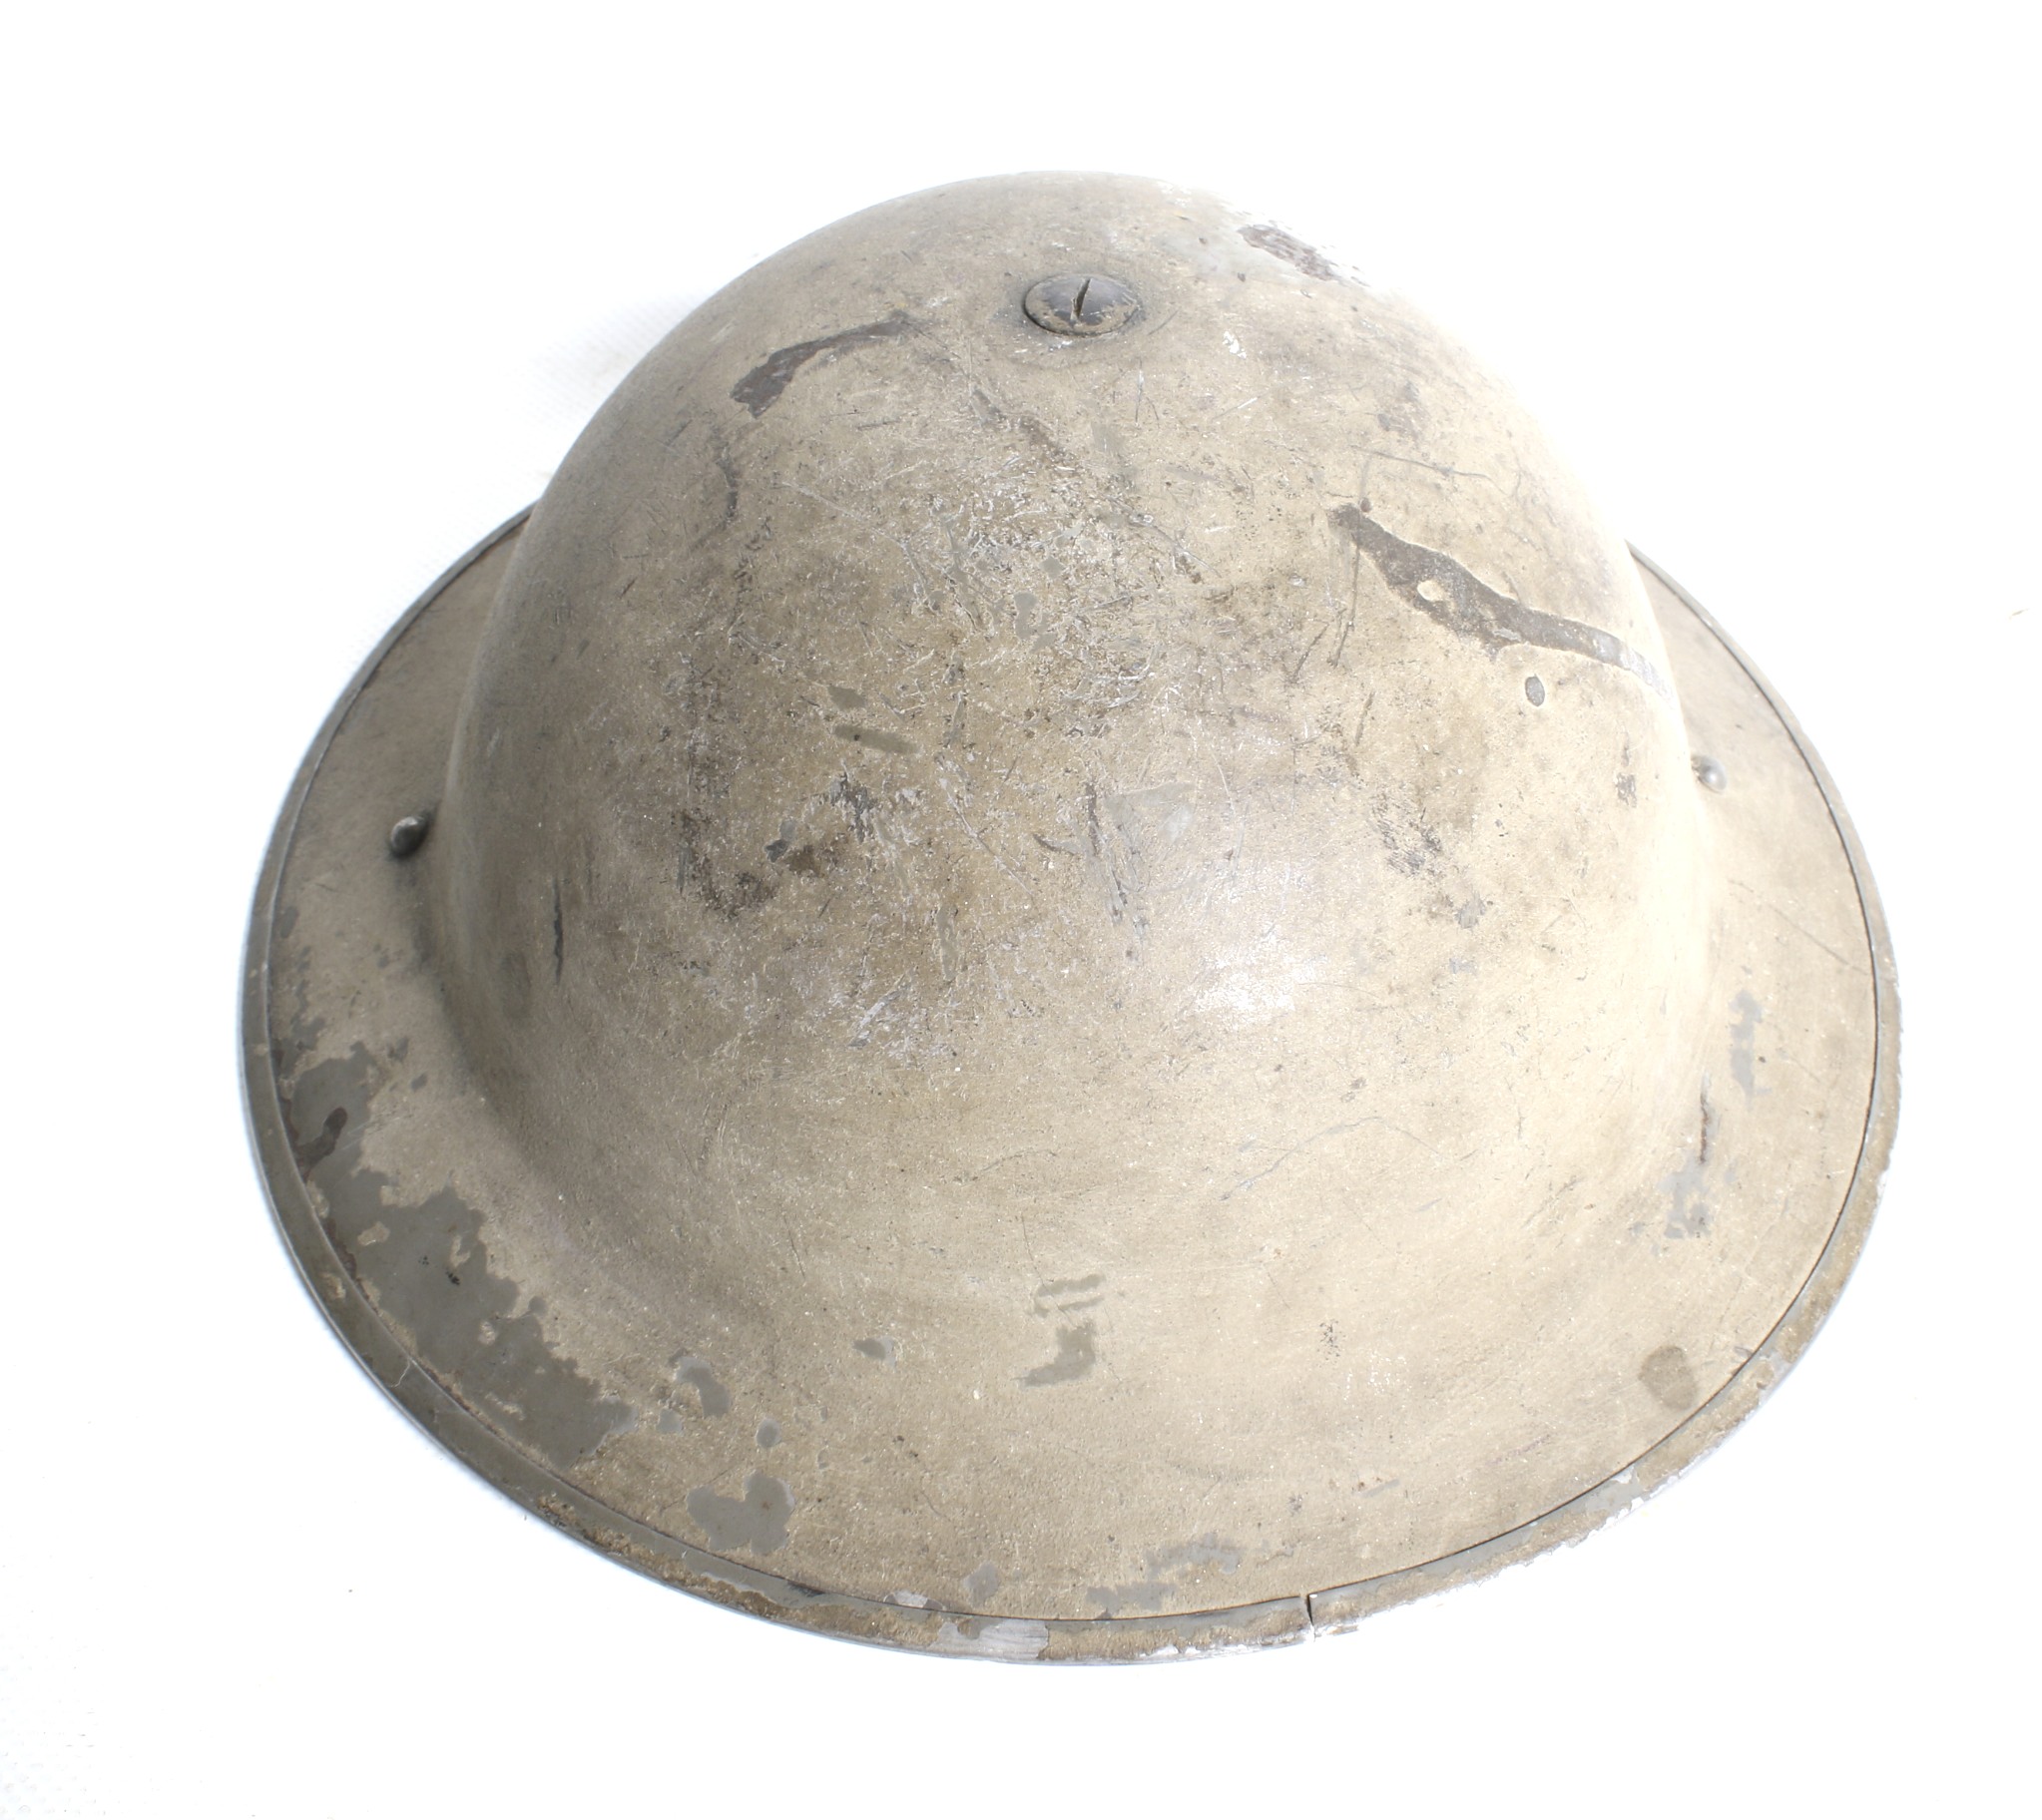 A WWII British Army Brodie helmet, dated 1940.